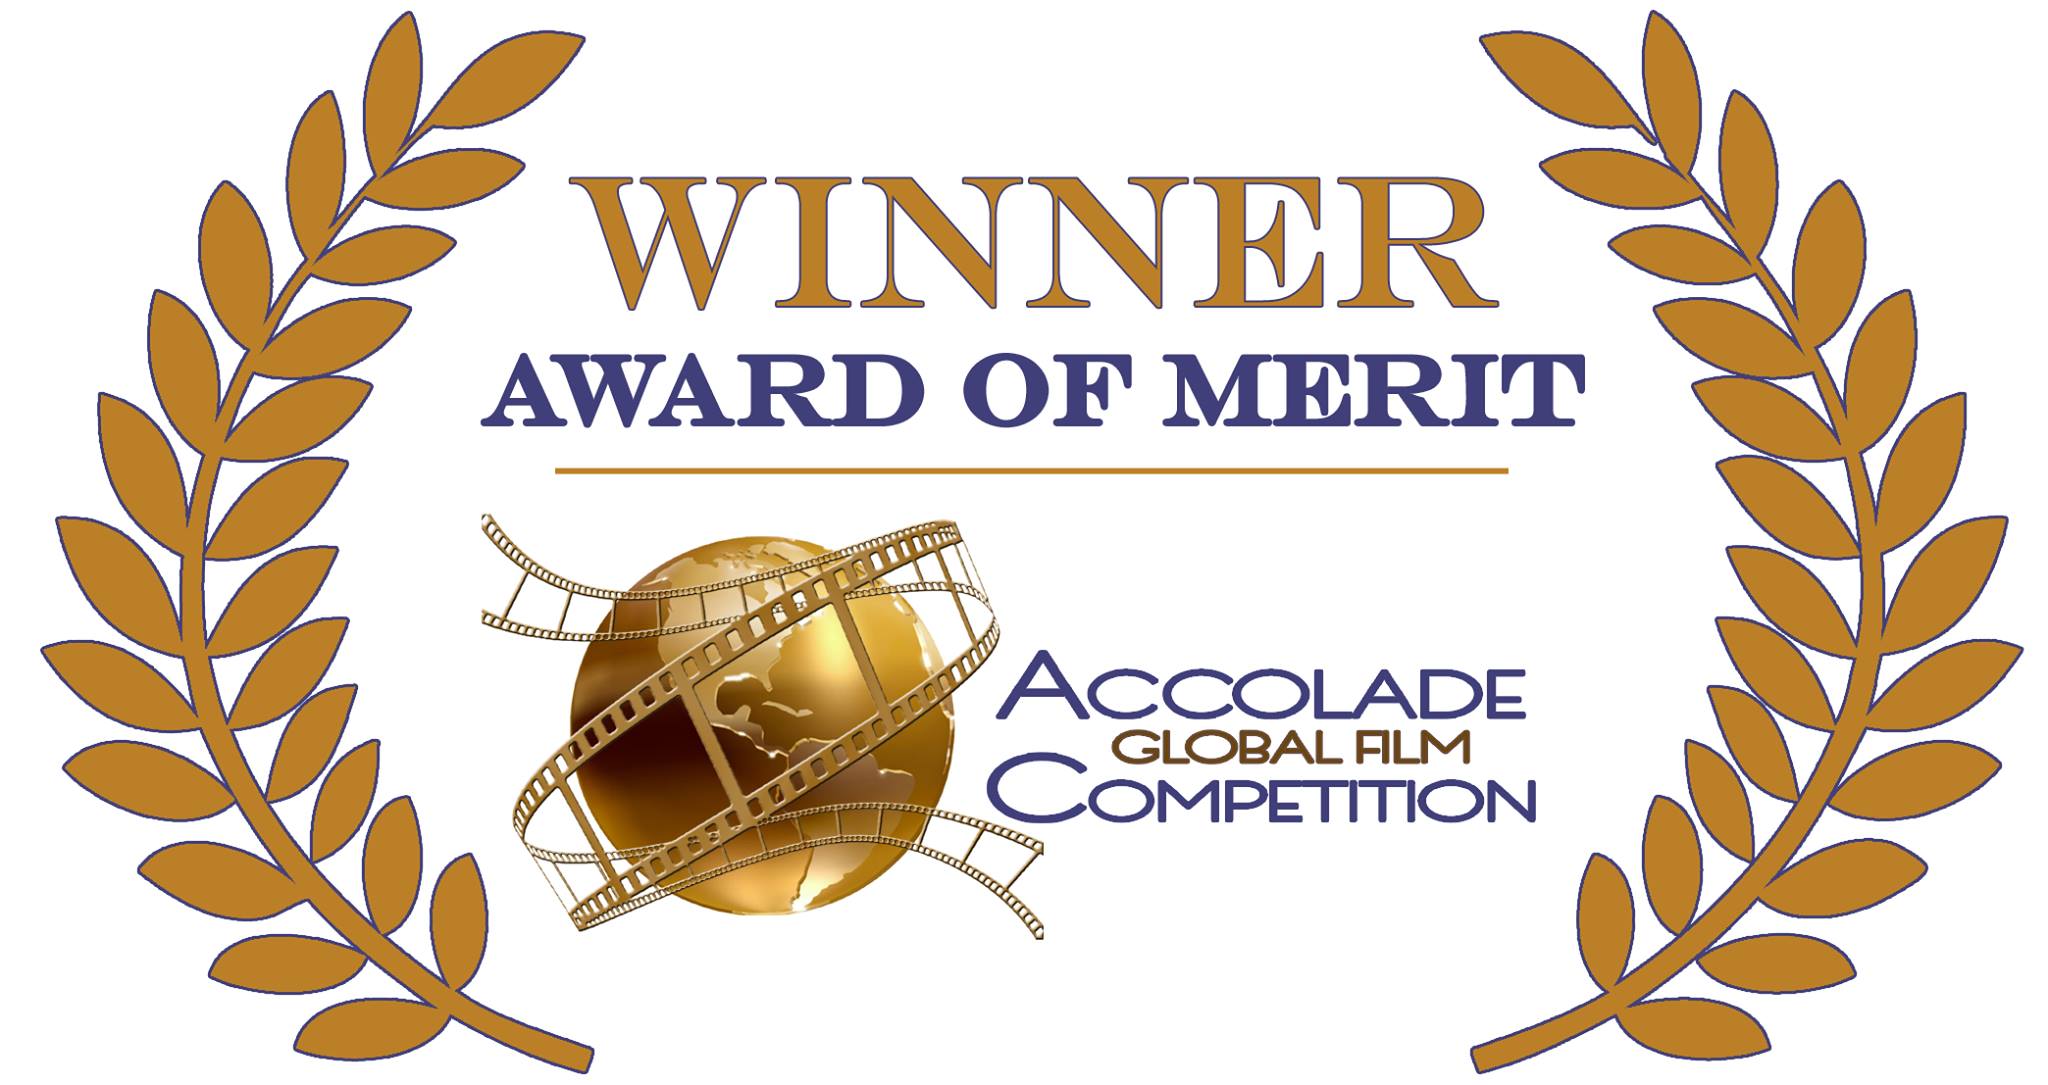 FILM FESTIVAL AWARDS: Accolade Global Film Competition 1- Award of Merit: Television - Pilot Program 2- Award of Merit: Direction 3- Award of Merit: Editing 4- Award of Merit: Creativity/Originality